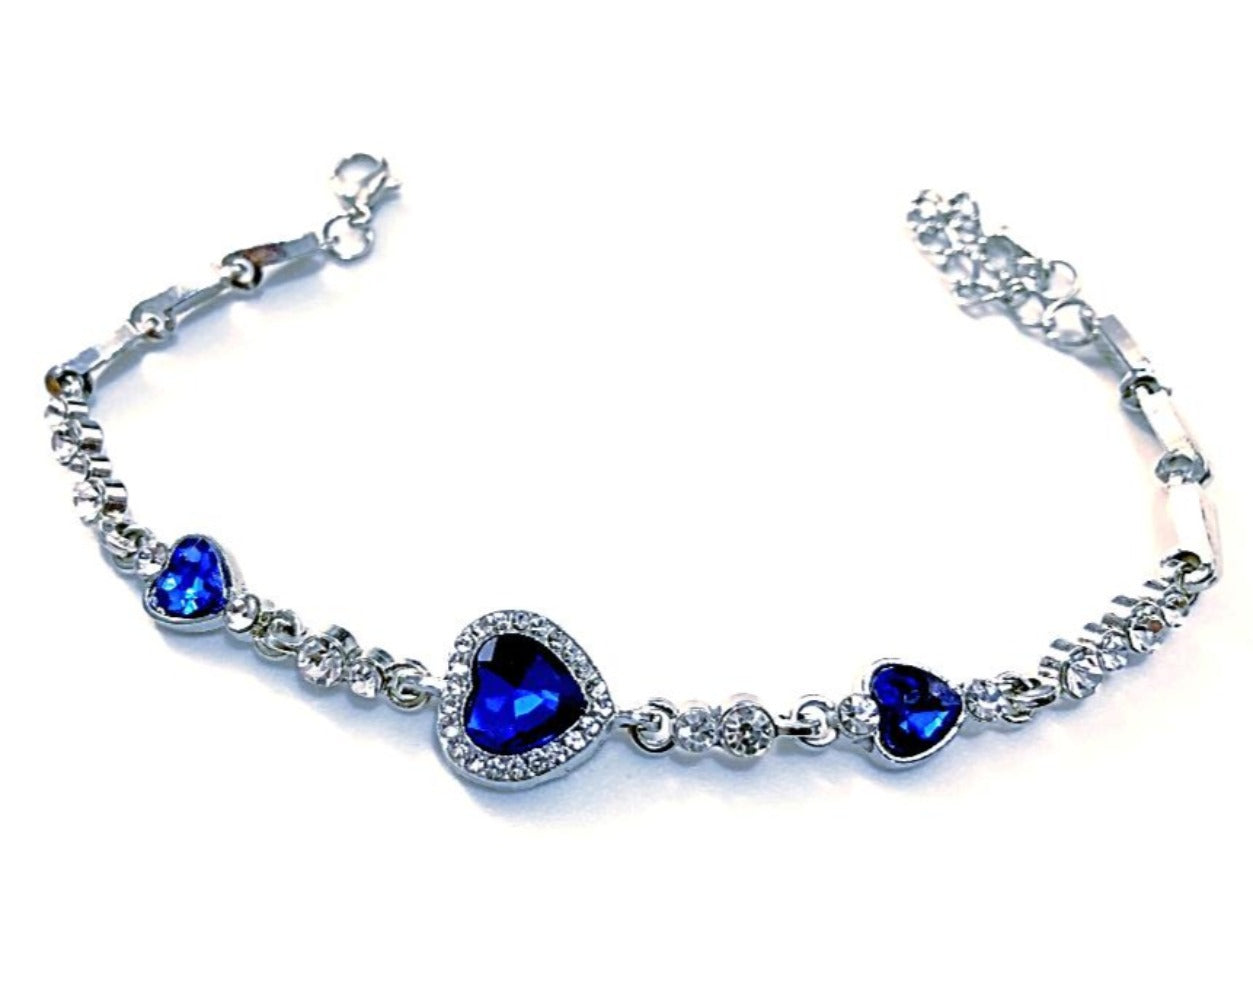 Royal Heart Crystal Rhinestone Bracelet